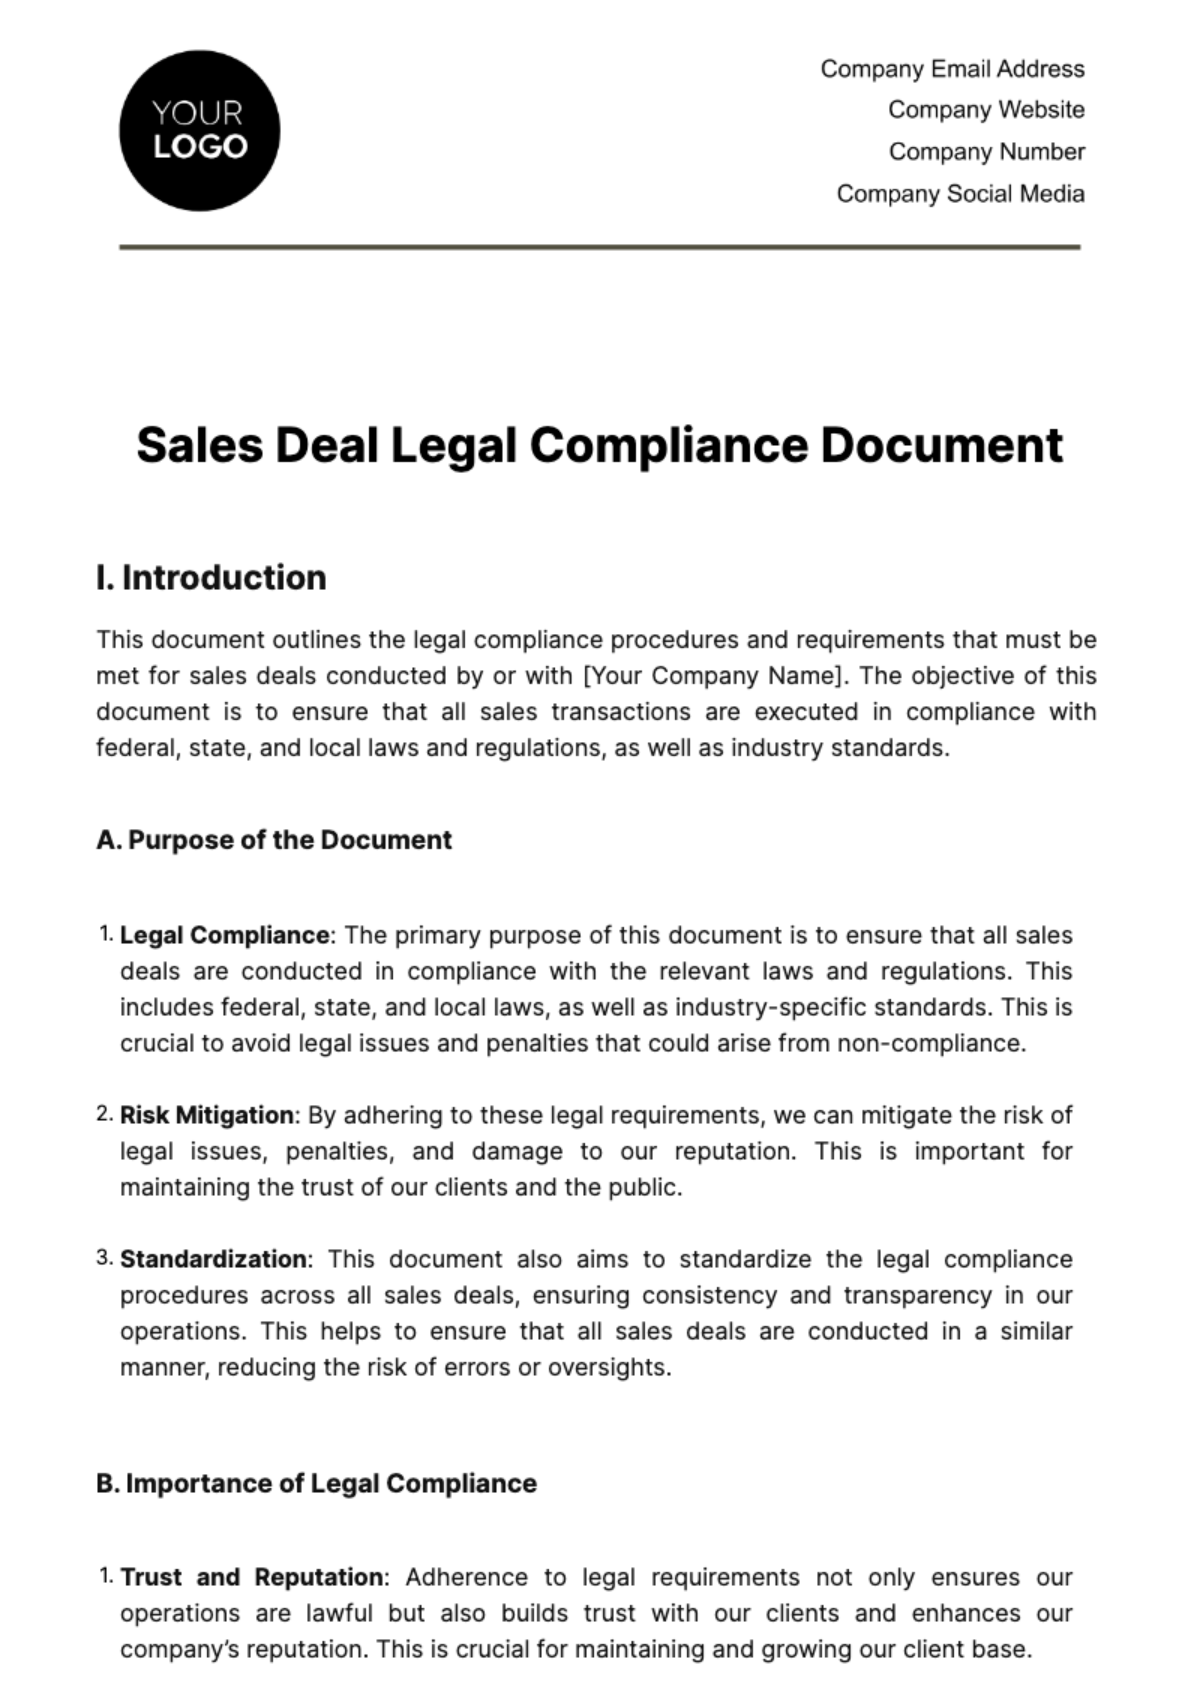 Sales Deal Legal Compliance Document Template